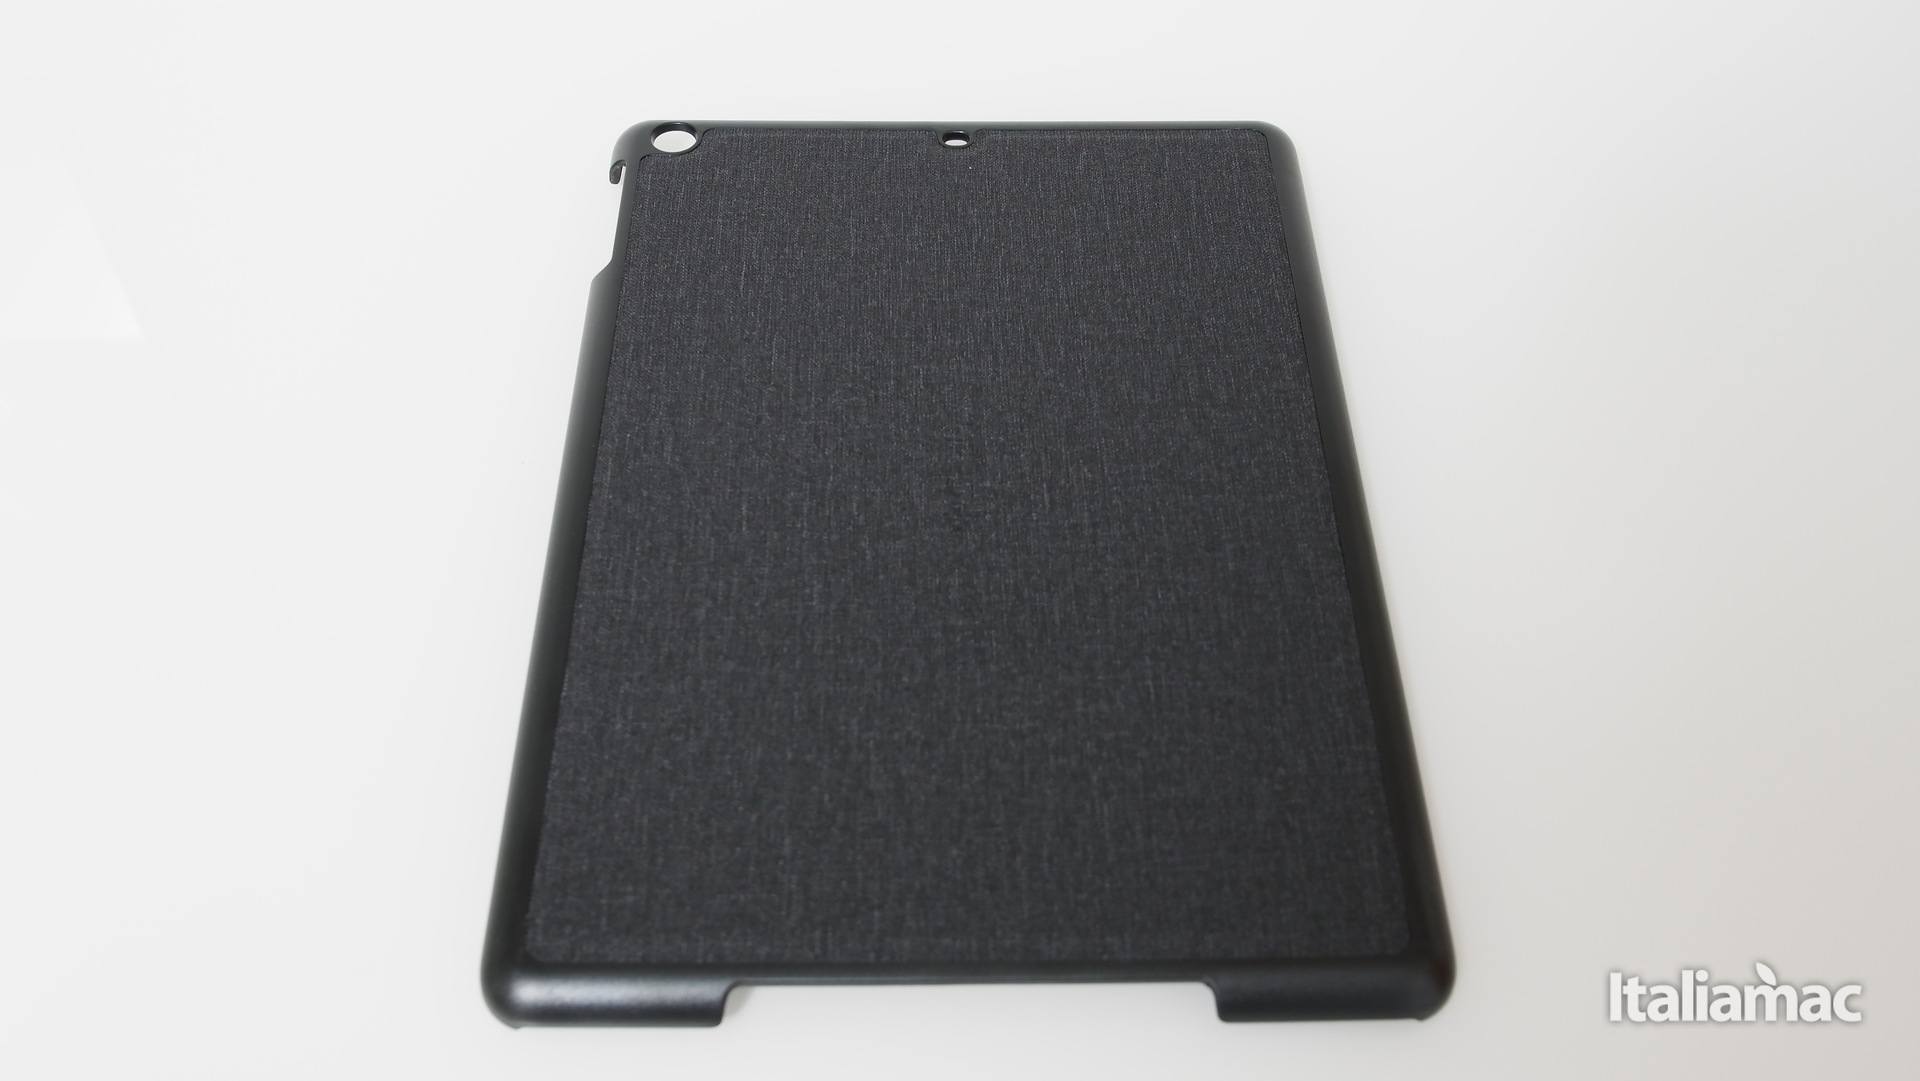 Gecko Covers: Tastiera Bluetooth per iPad da 9.7" 2 in 1 impermeabile 5